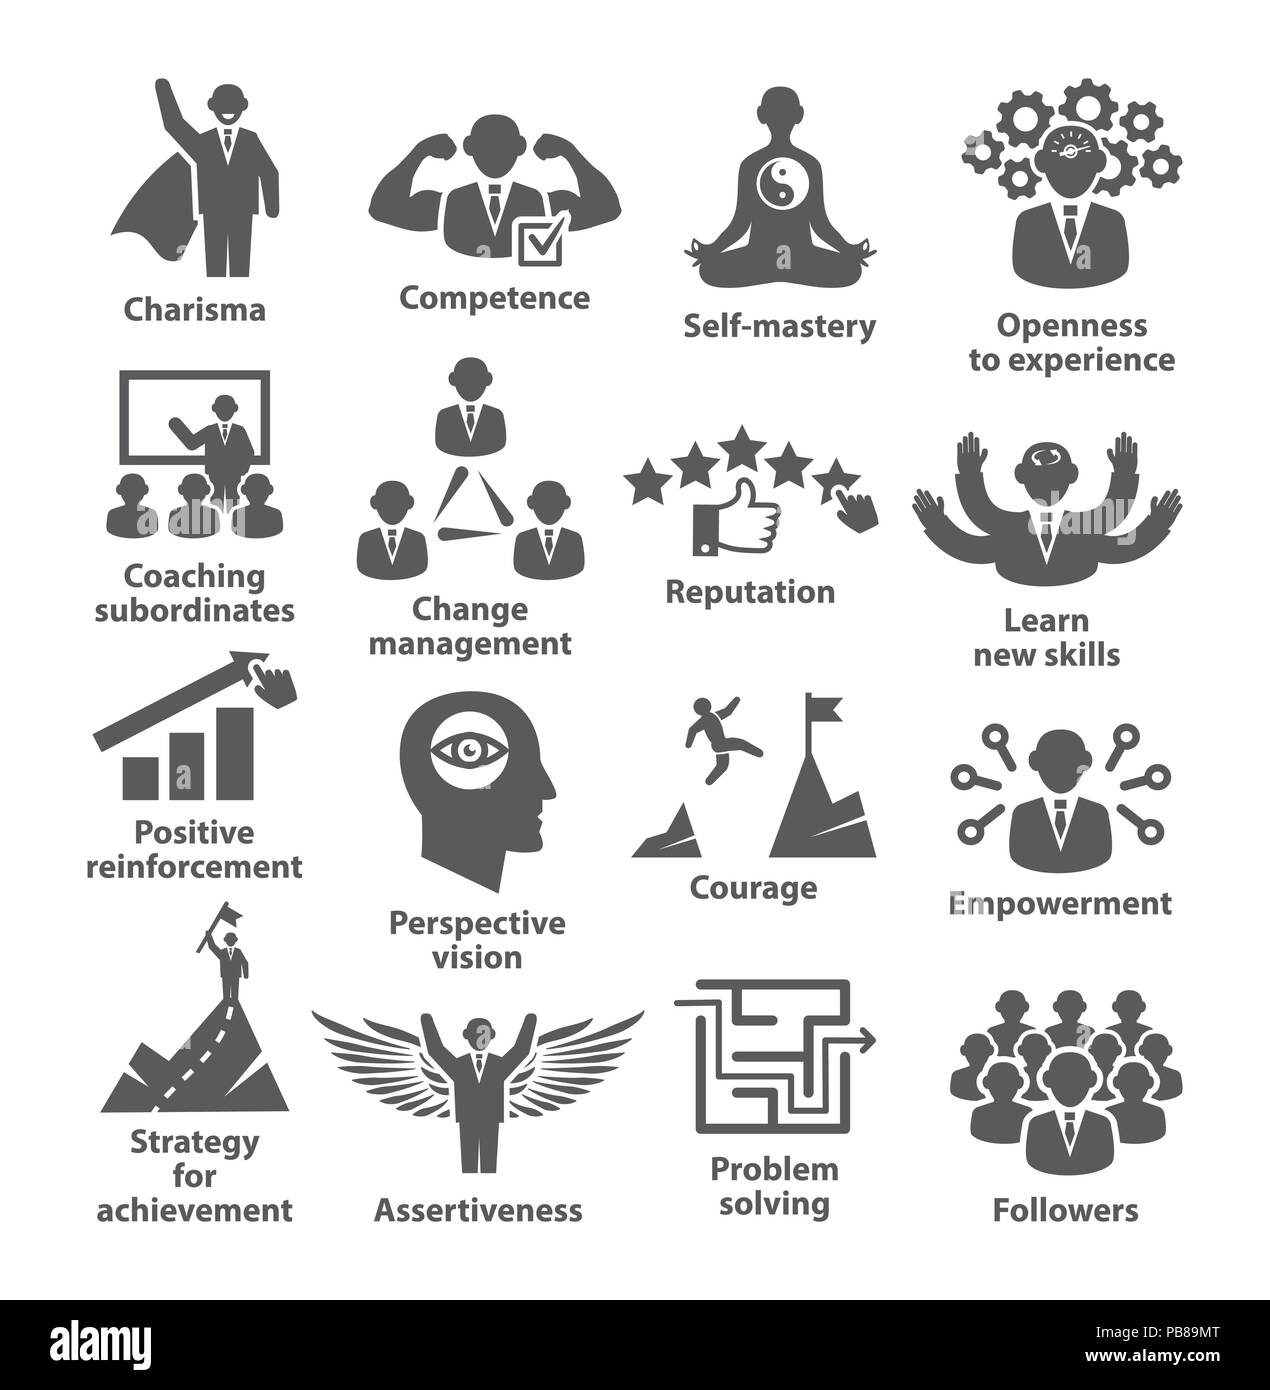 Business Management Pack 45 iconos iconos para el liderazgo, carrera Imagen  Vector de stock - Alamy